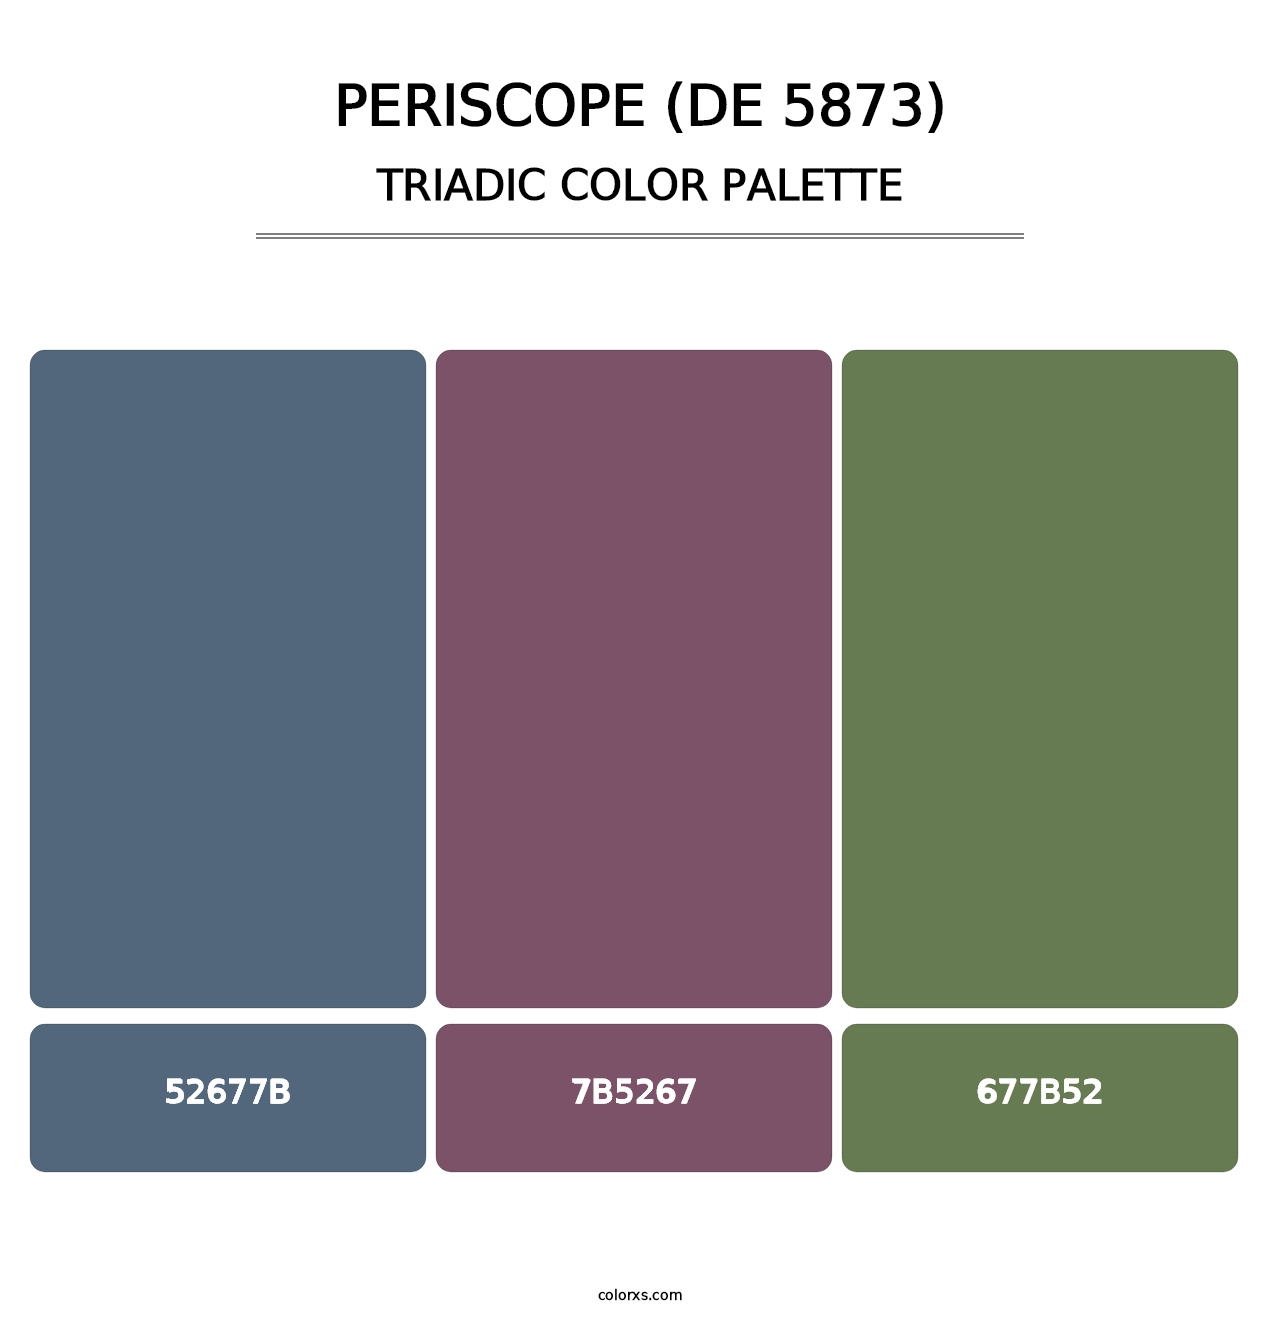 Periscope (DE 5873) - Triadic Color Palette